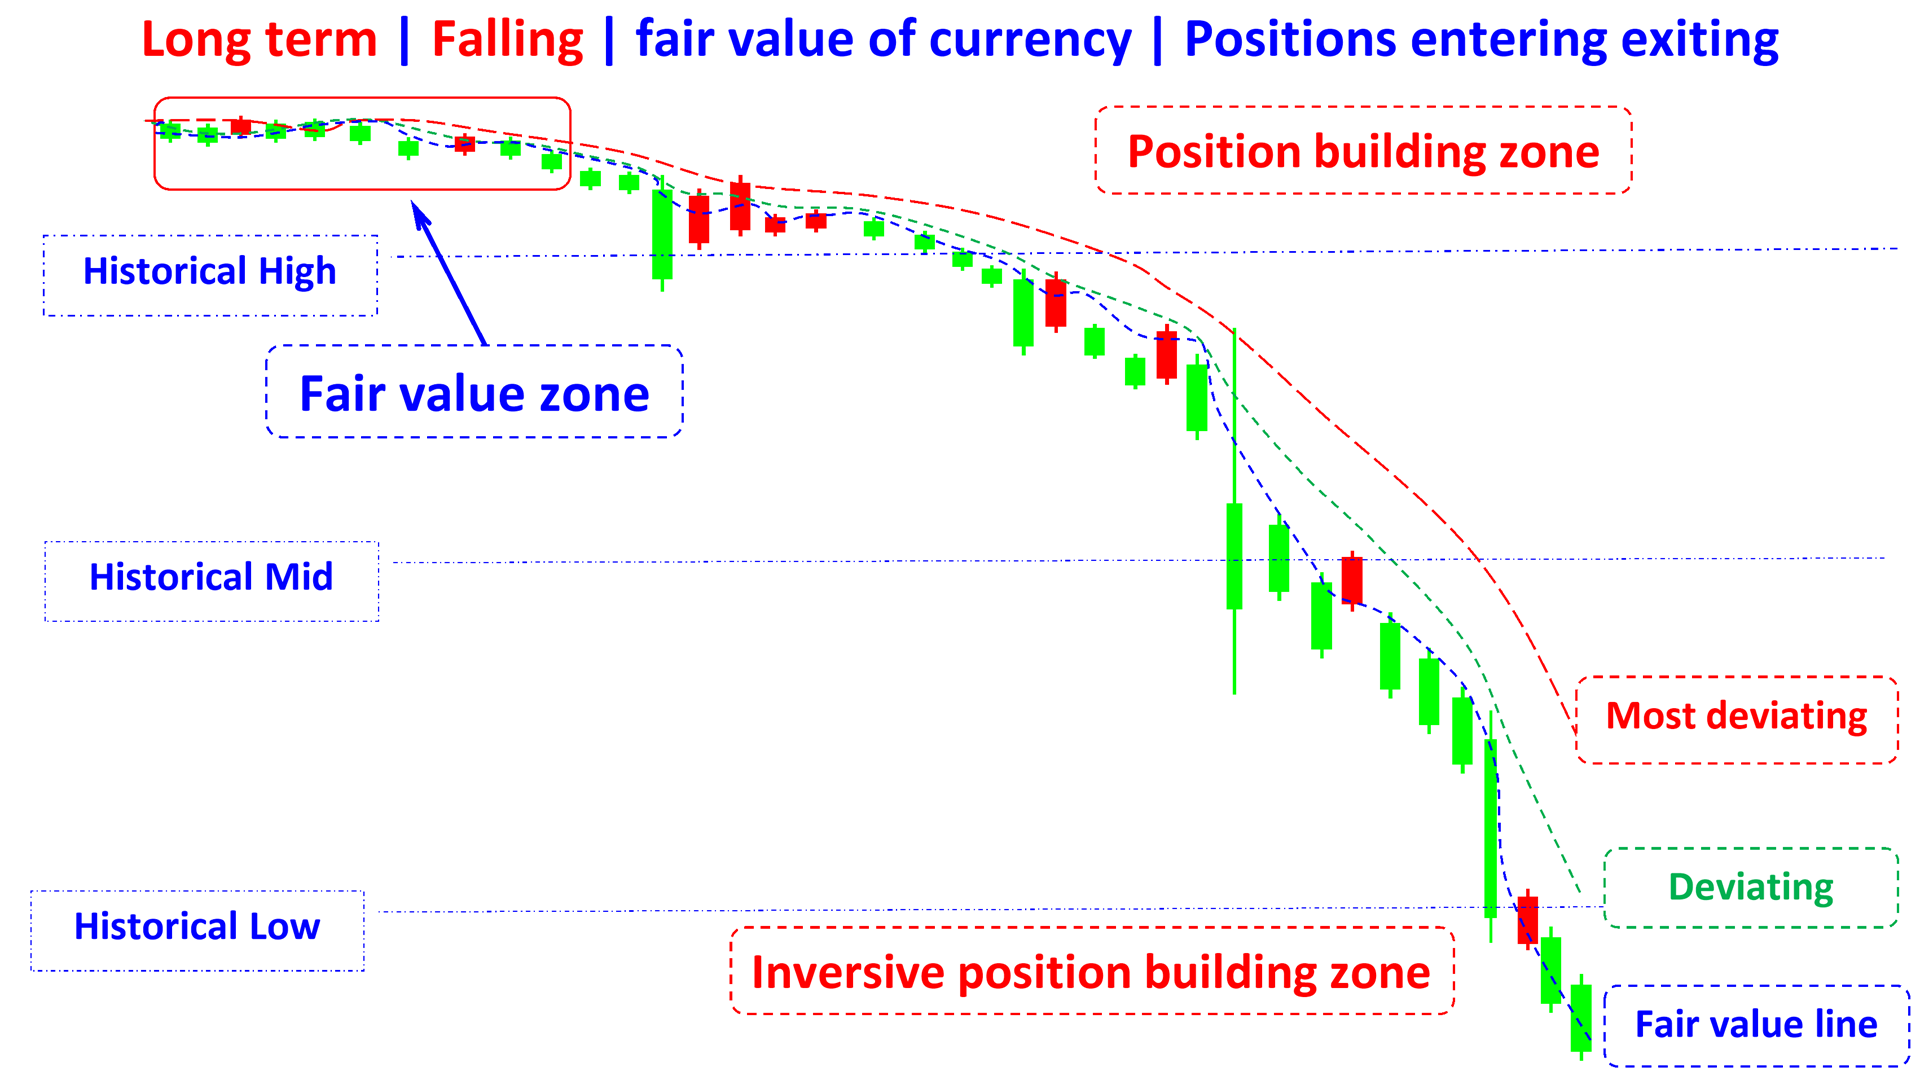 fair value indicators of currency in long terms falling en